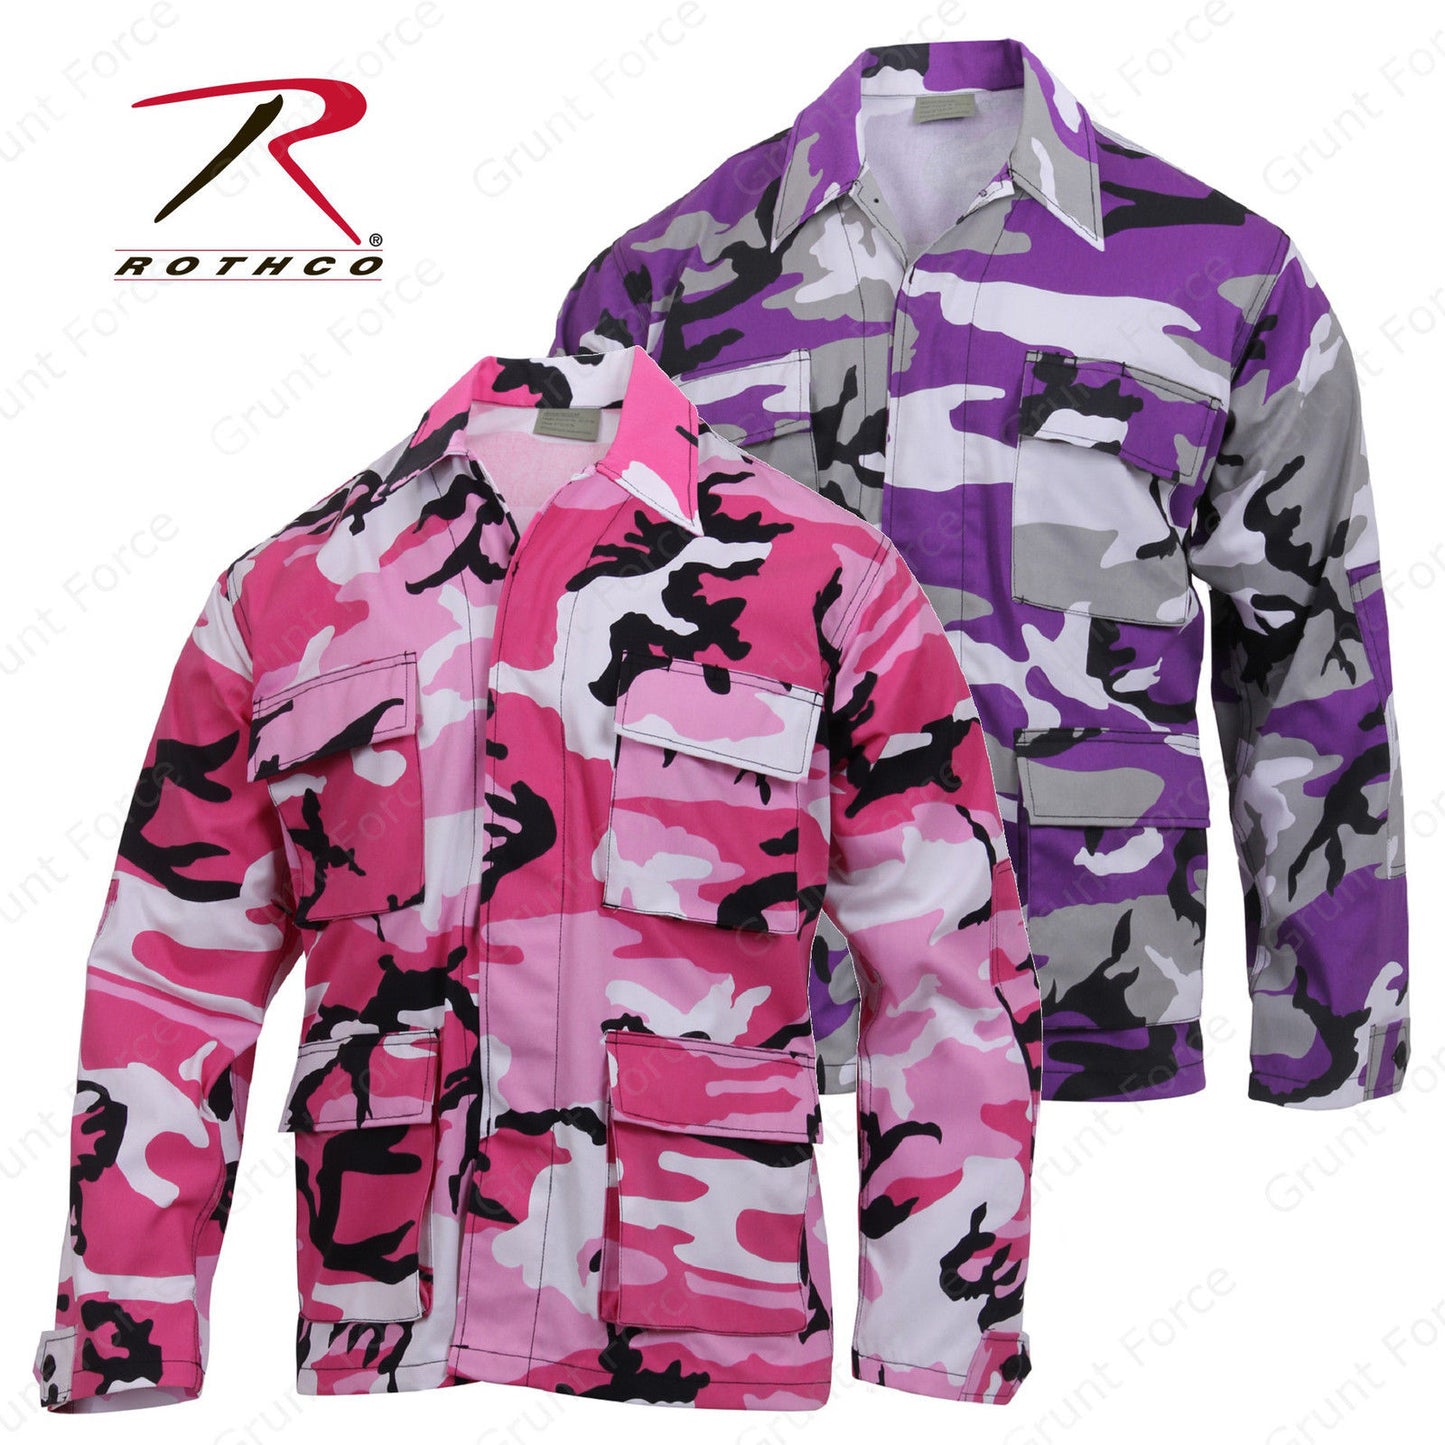 Rothco Ultra Violet or Pink Camo BDU Top - Mens Long Sleeve BDU Camo Shirt